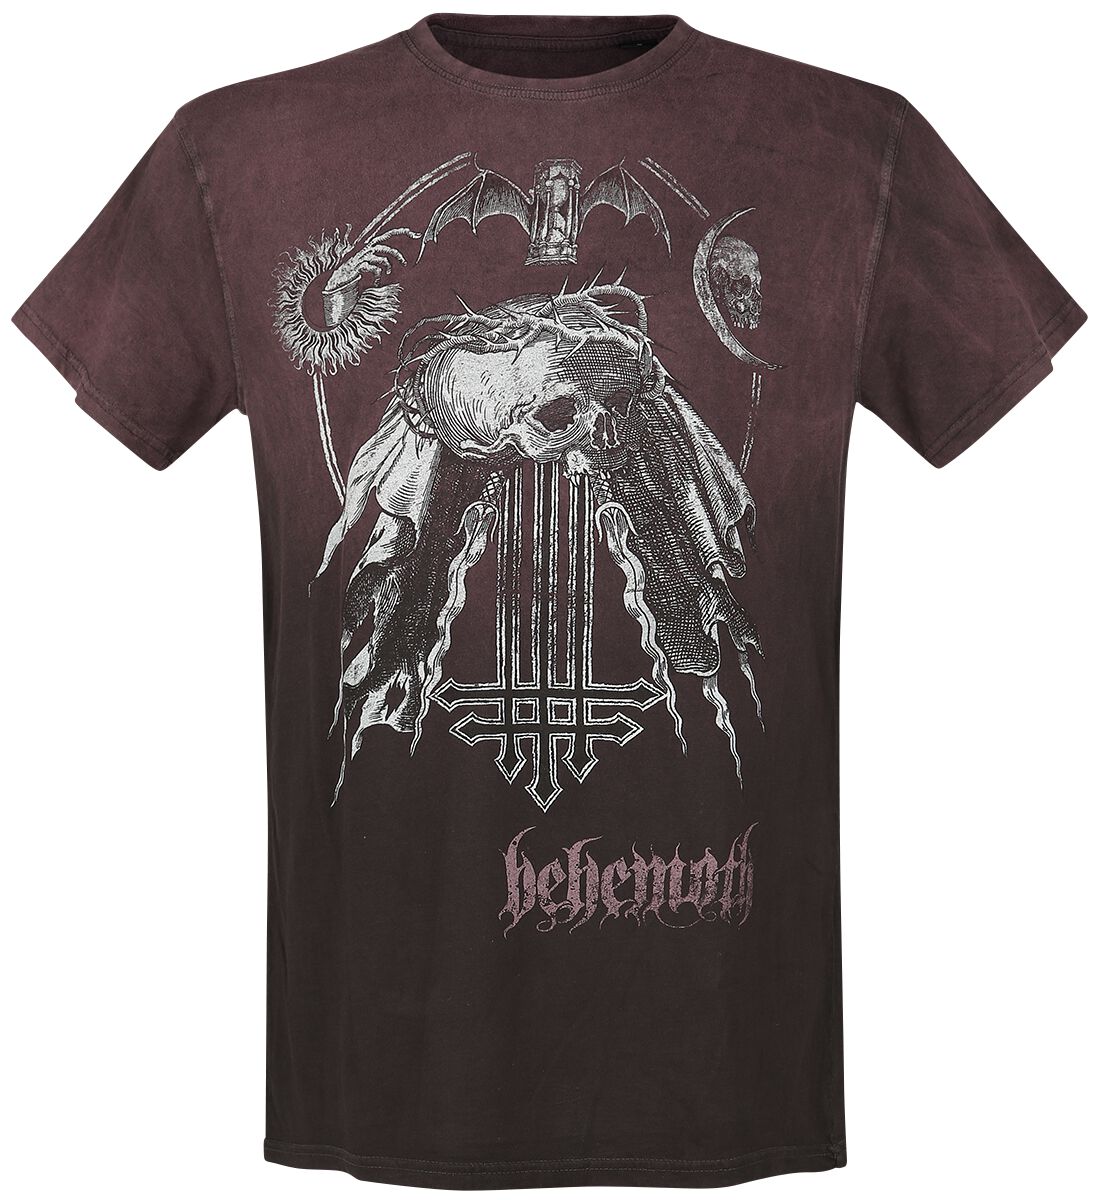 Behemoth Profane Skull T-Shirt burgundy